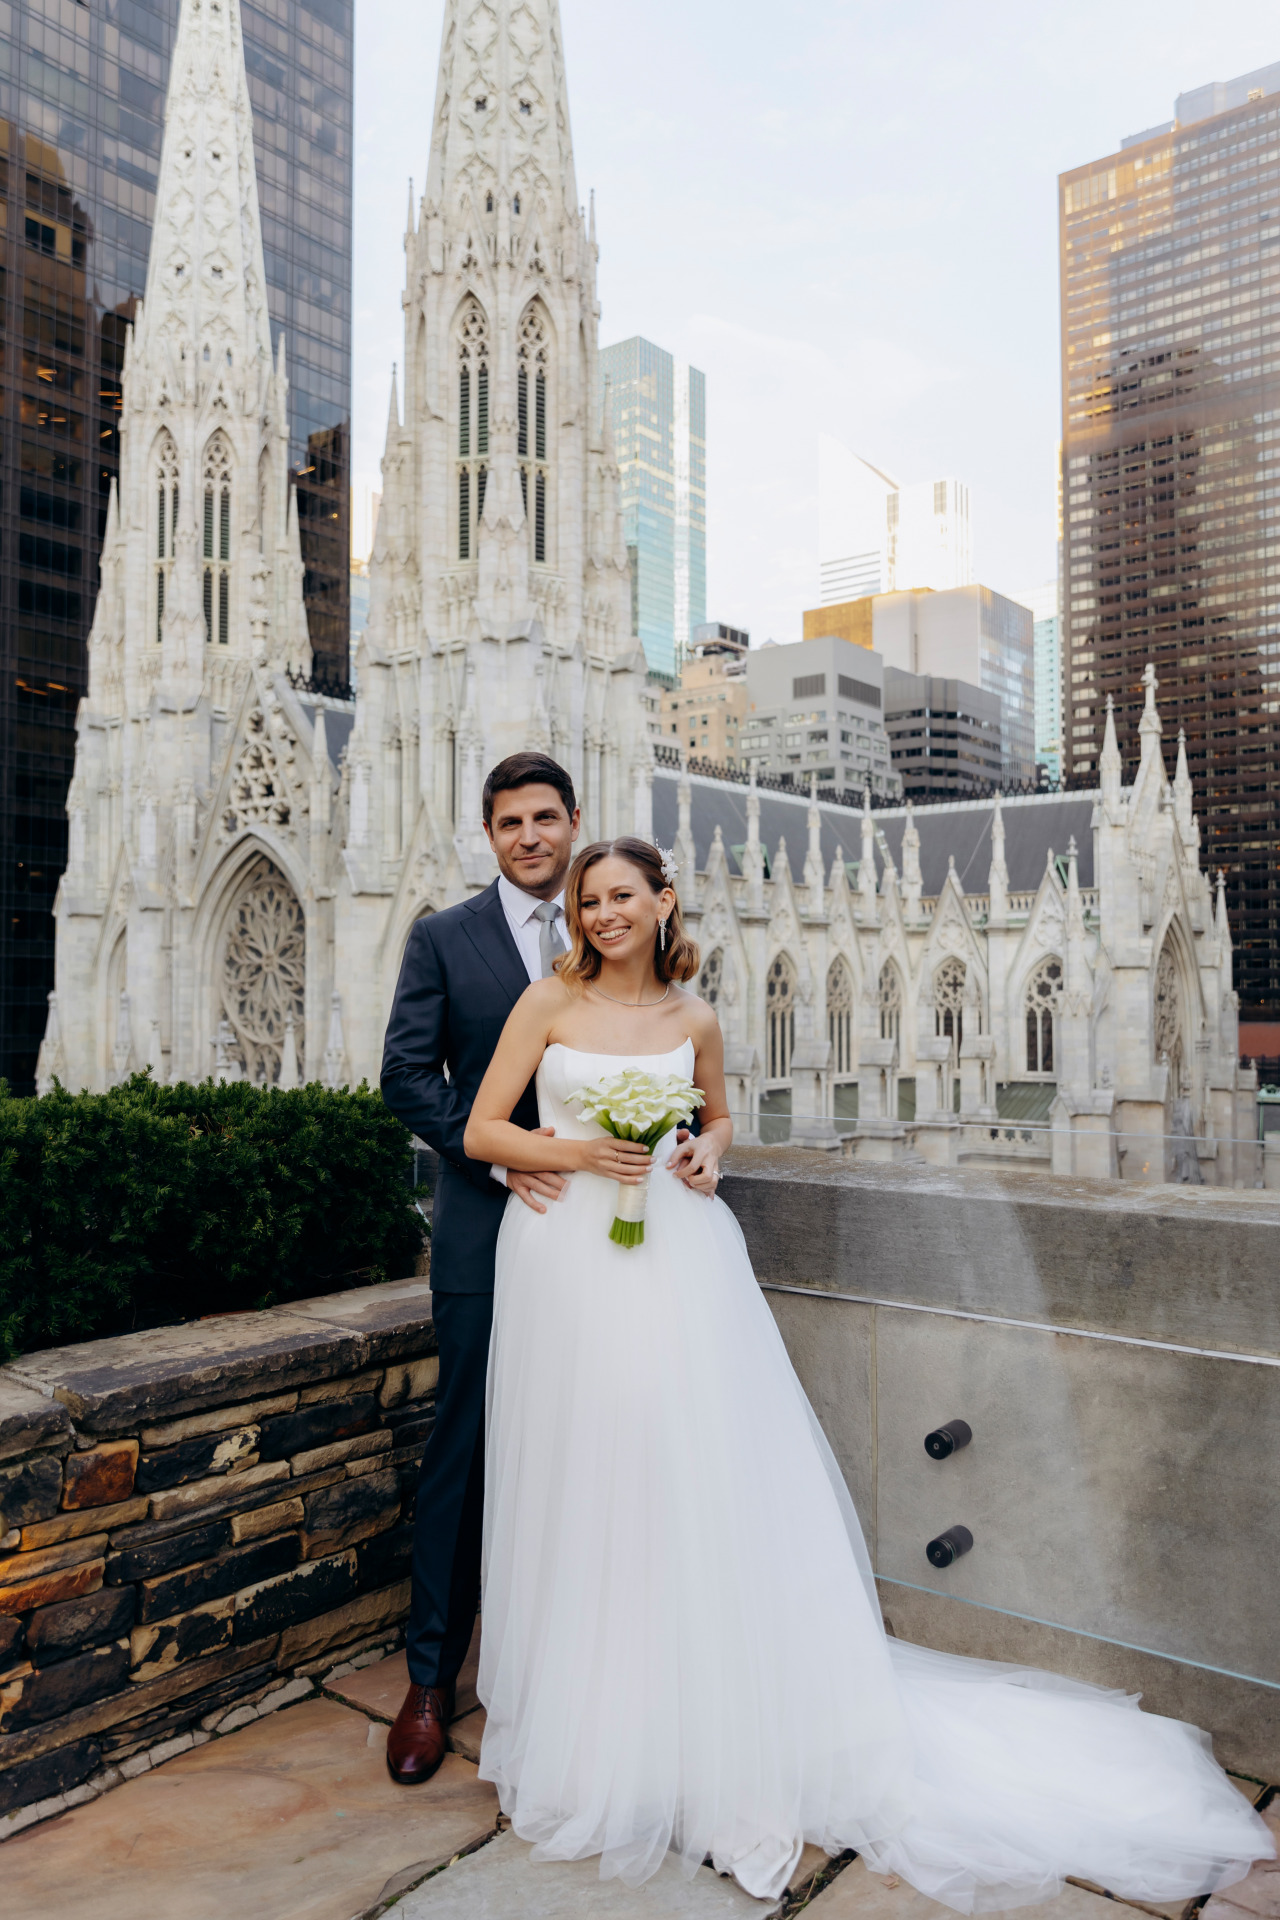 6 Rooftop wedding photoshoot New York City 1